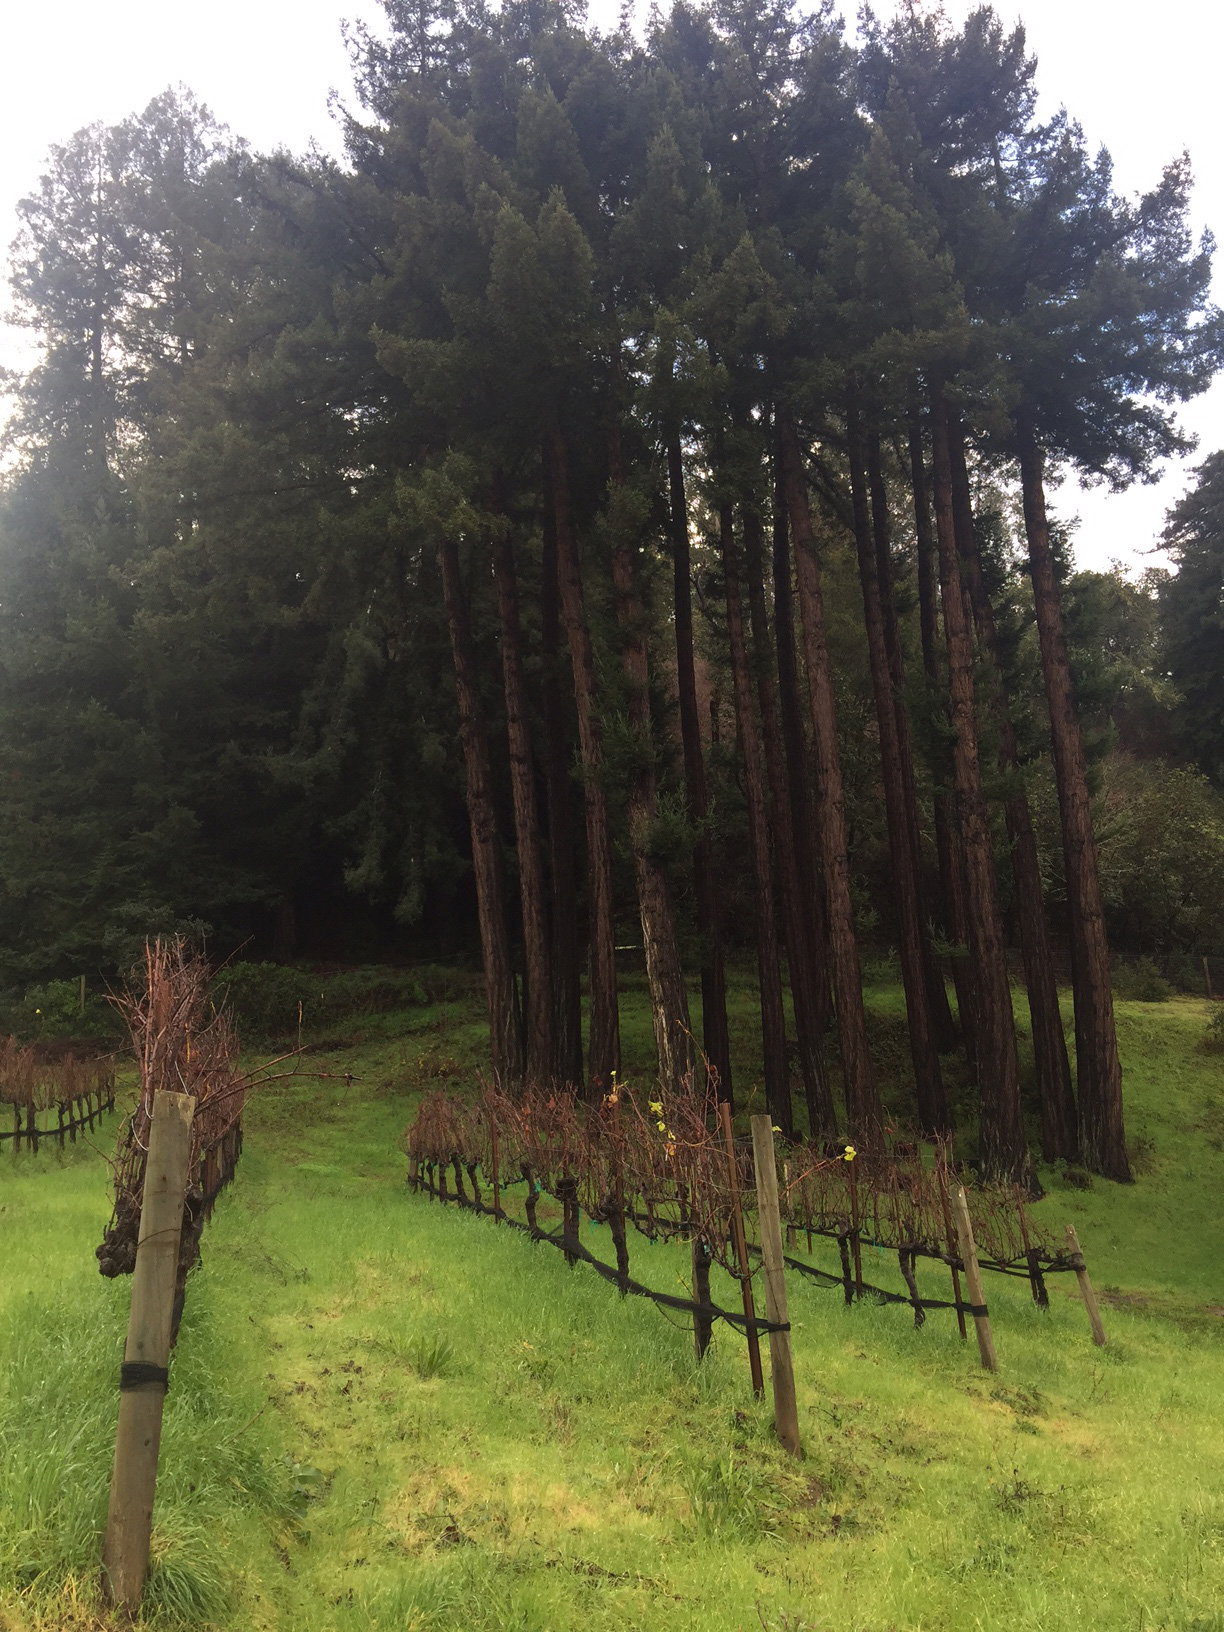 Vines at Woodruff Vineyard in the shadow of redwood trees